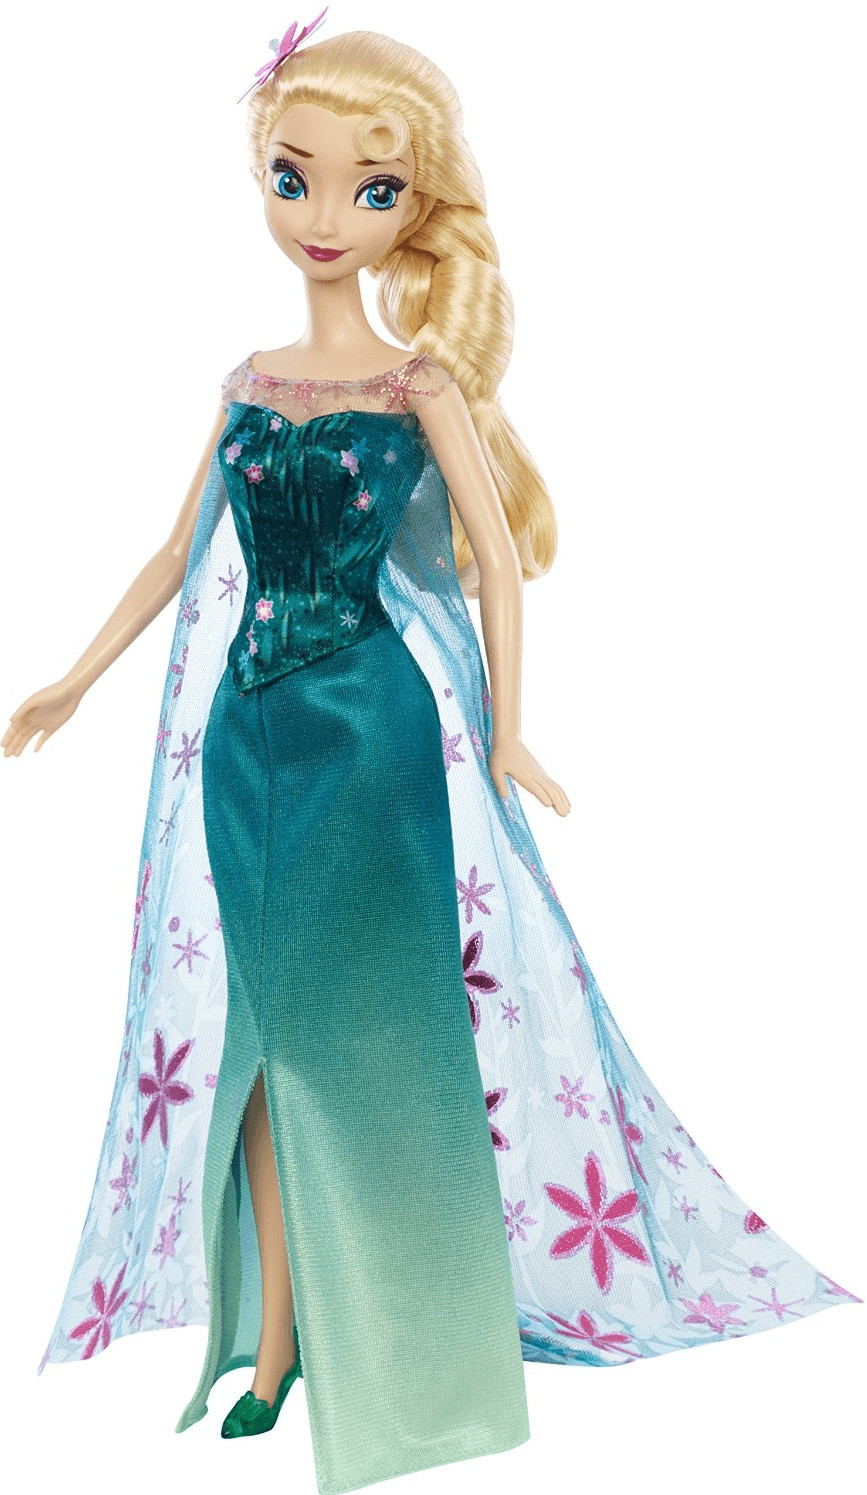 Mattel Disney Frozen Fever - Elsa